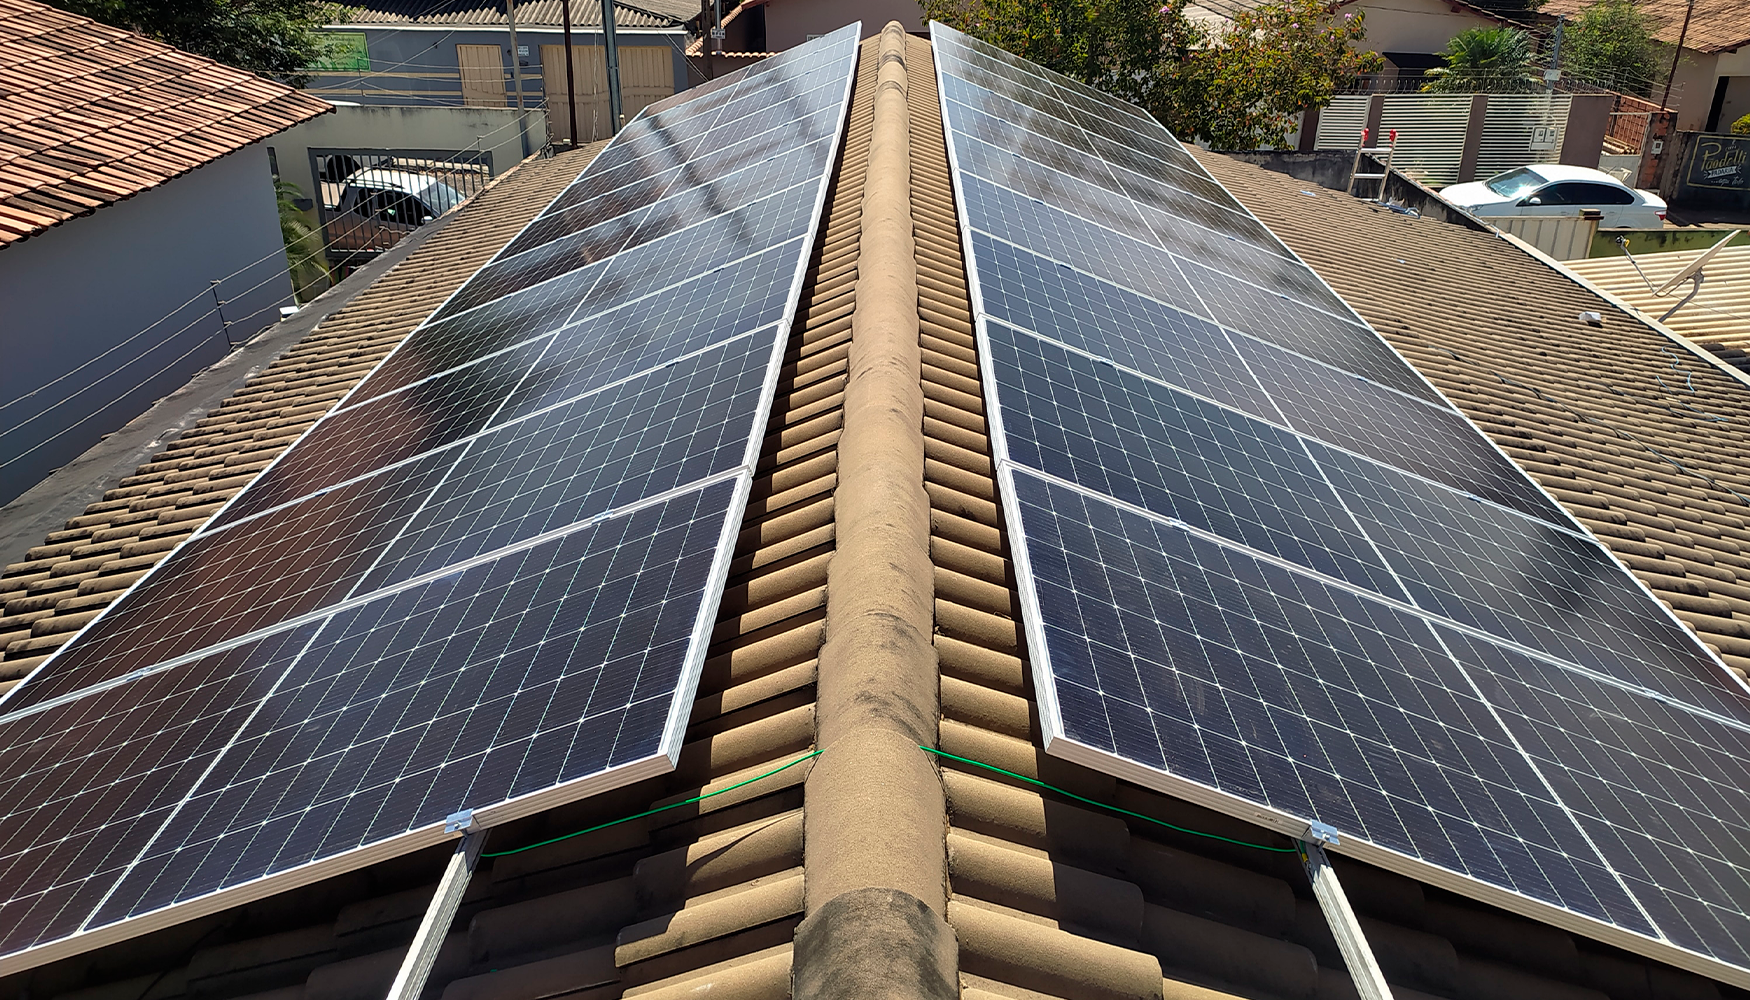 Energia Solar Residencial. Sistema de 4,36 kWp, com 8 módulos